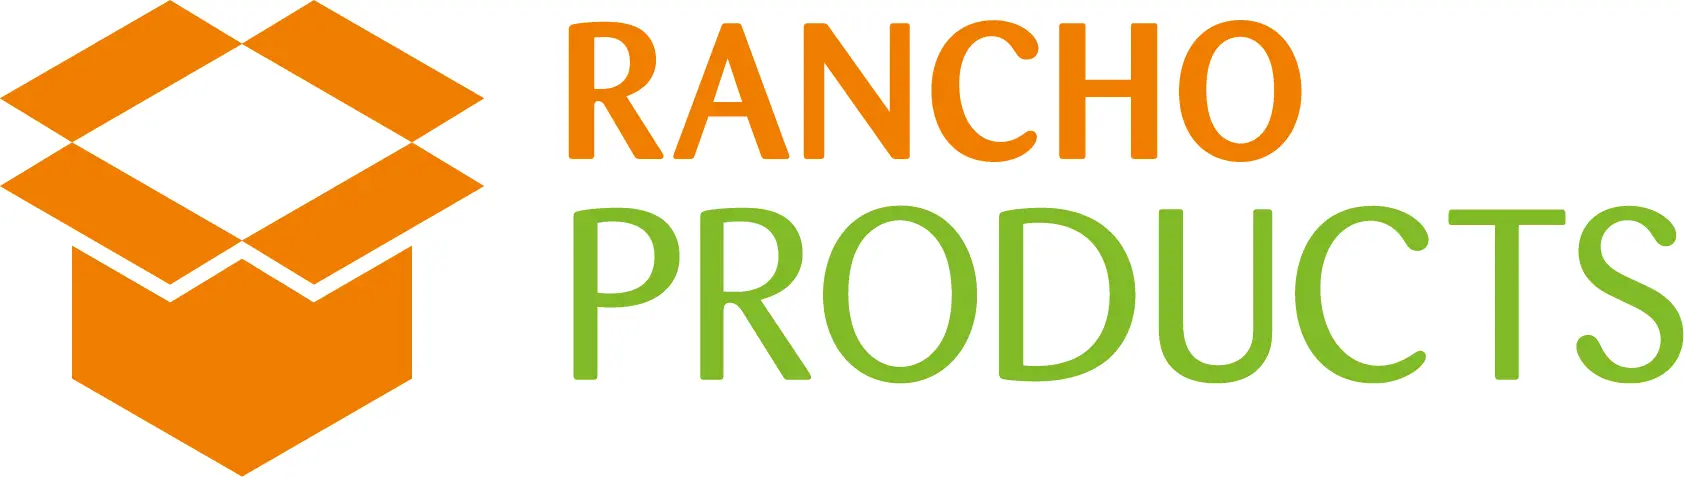 Rancho Products Logo